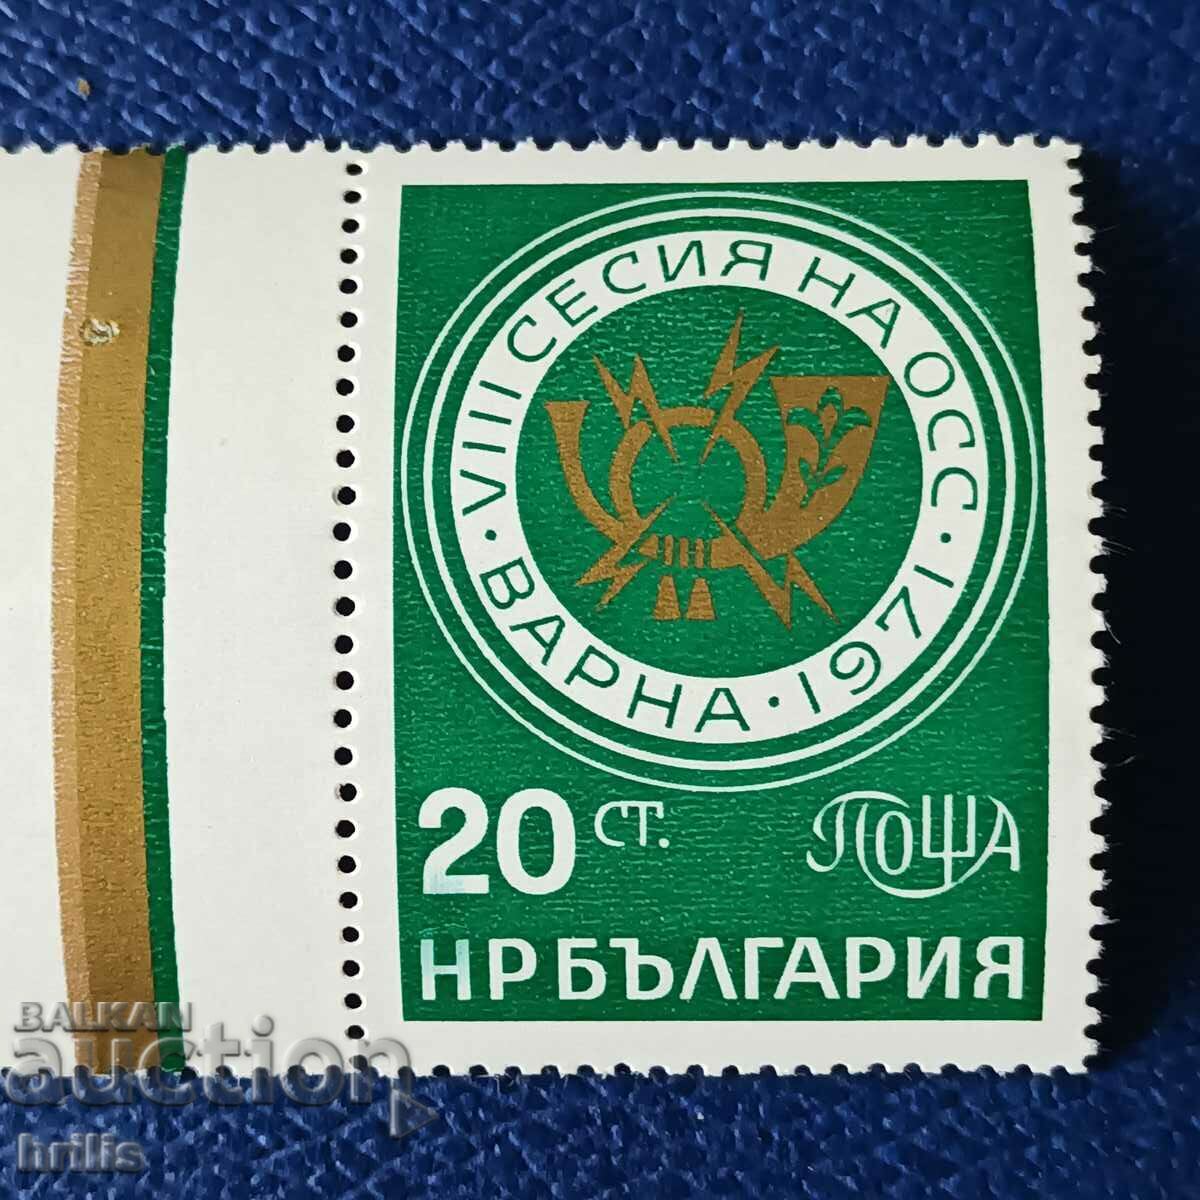 BULGARIA 1971 - SESIUNEA 8 OSCE